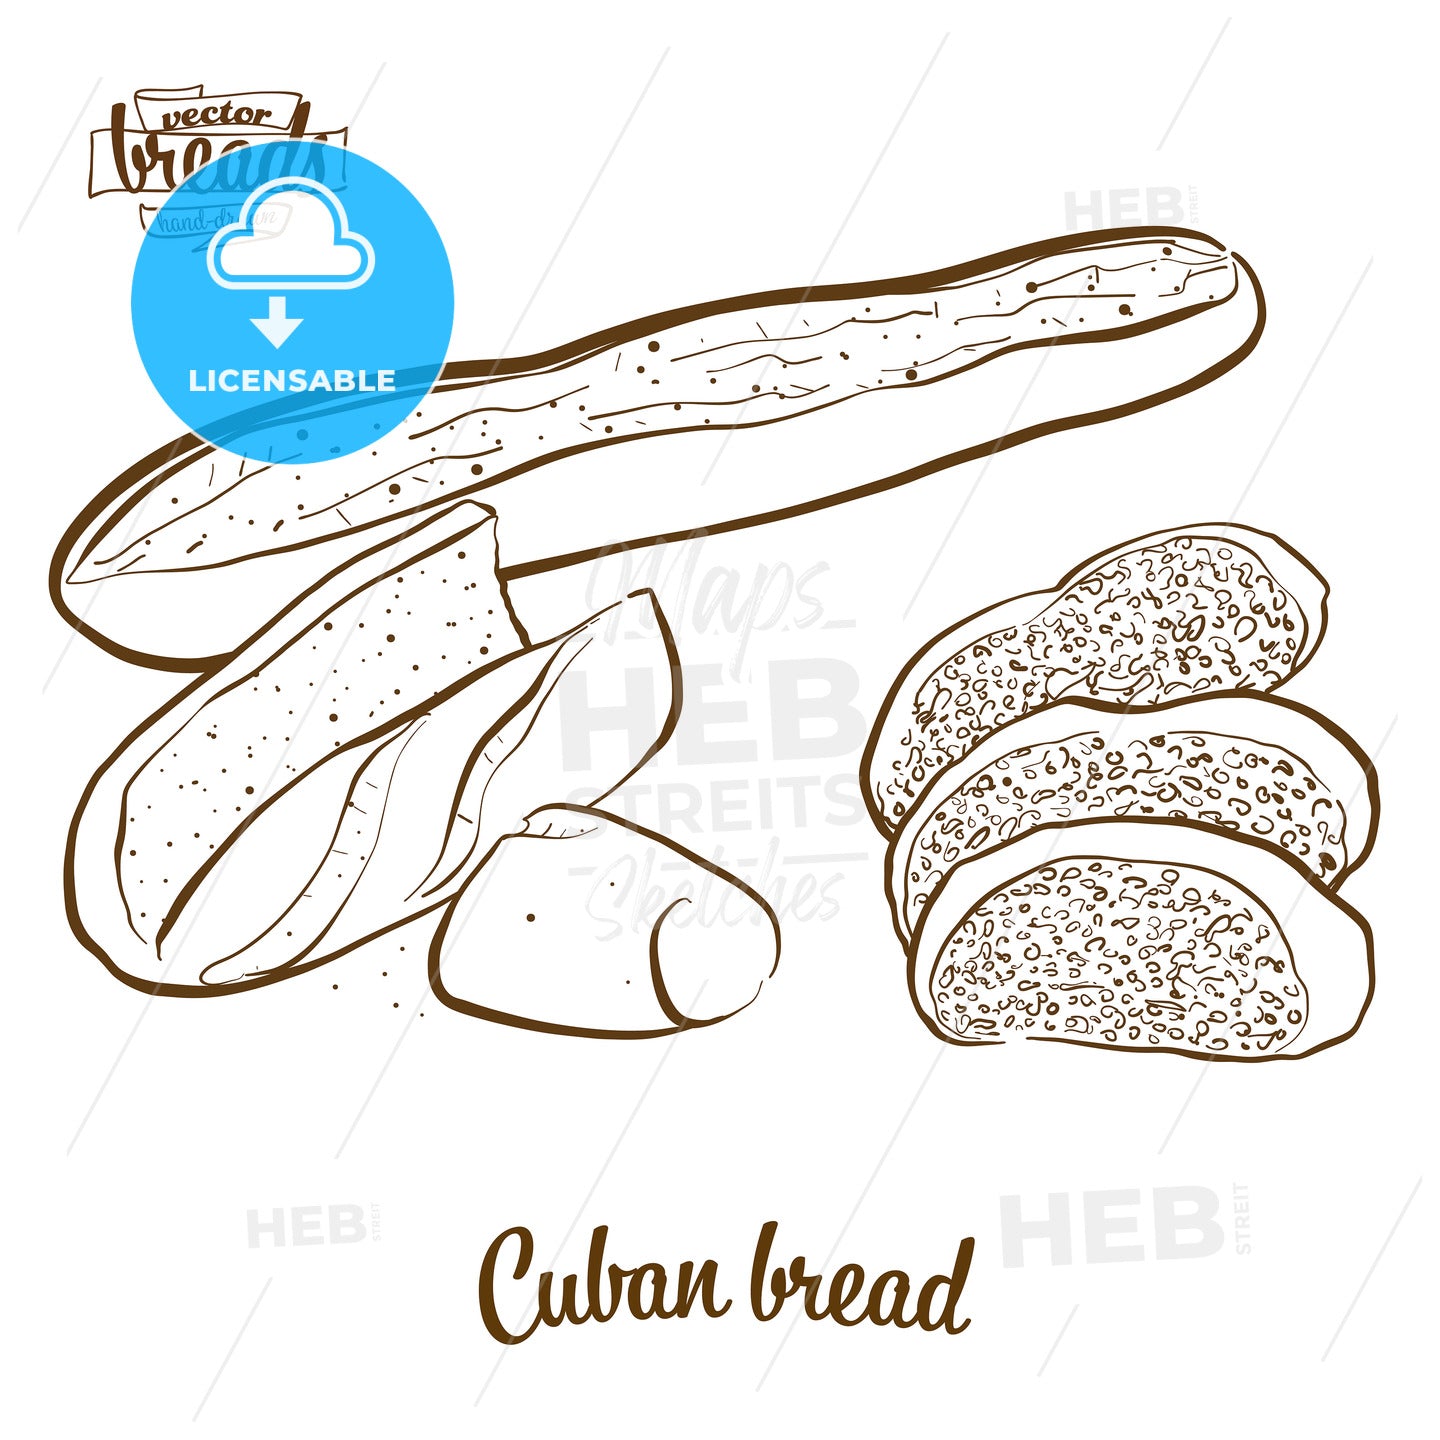 Cuban bread bread vector drawing – instant download